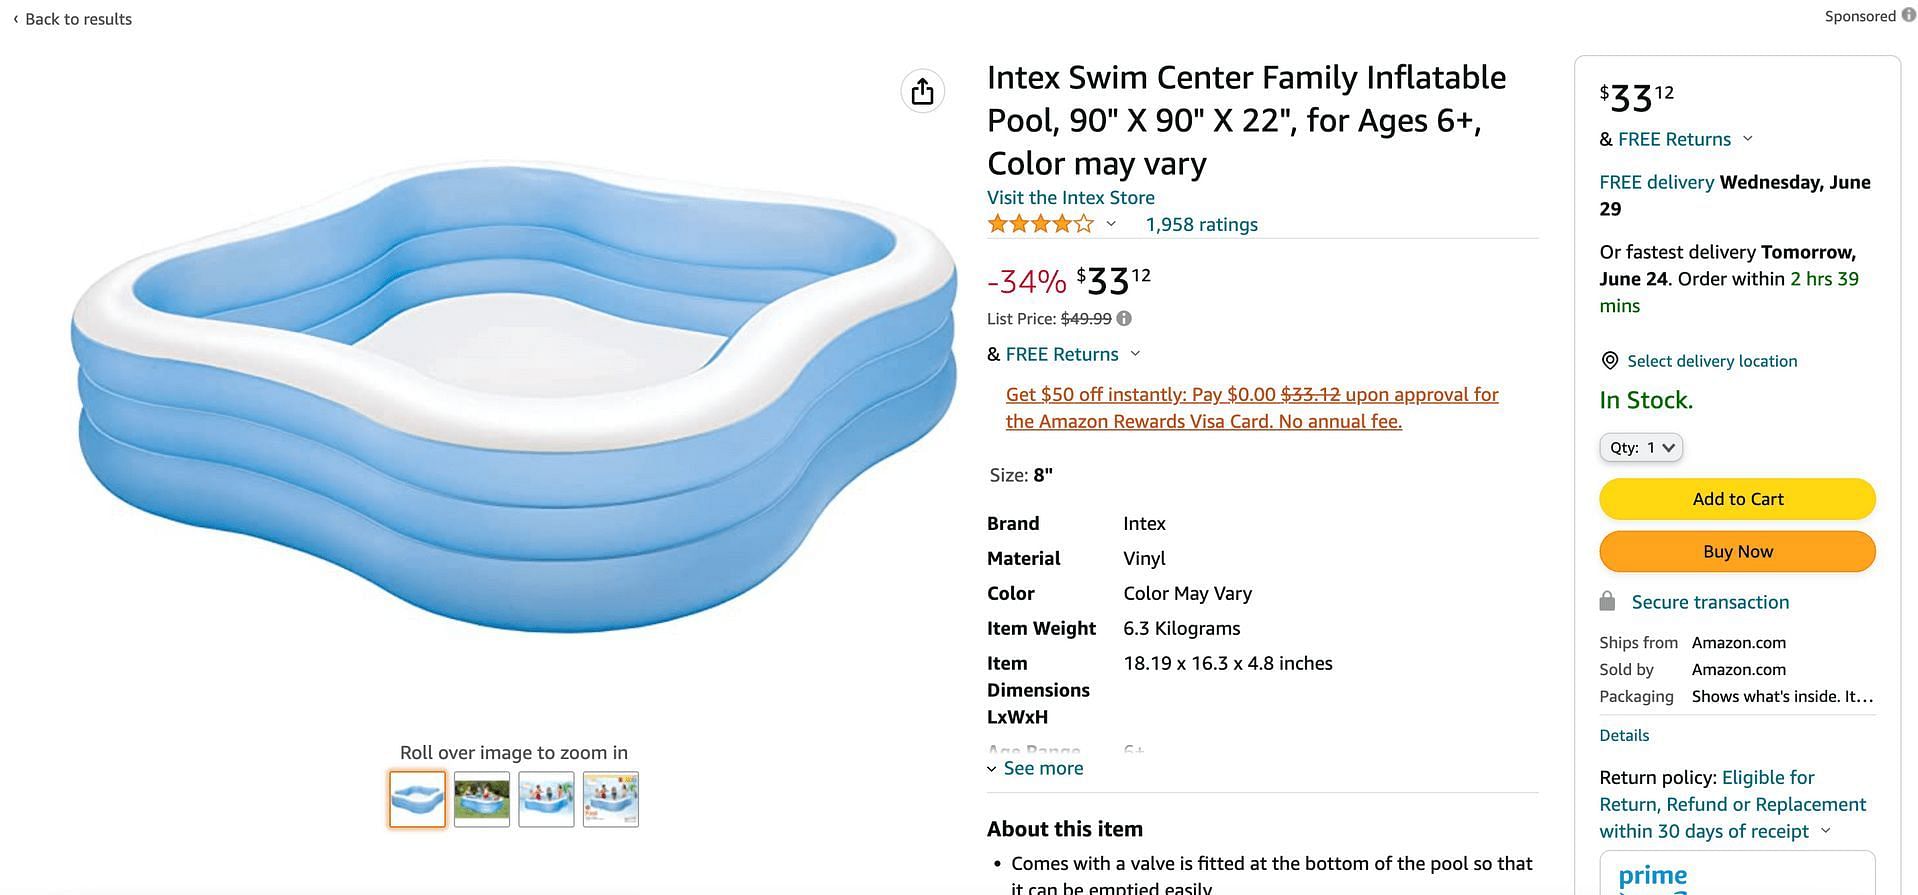 Amazon is selling the TikTok inflatable pool for $33. (Image via Amazon.com)